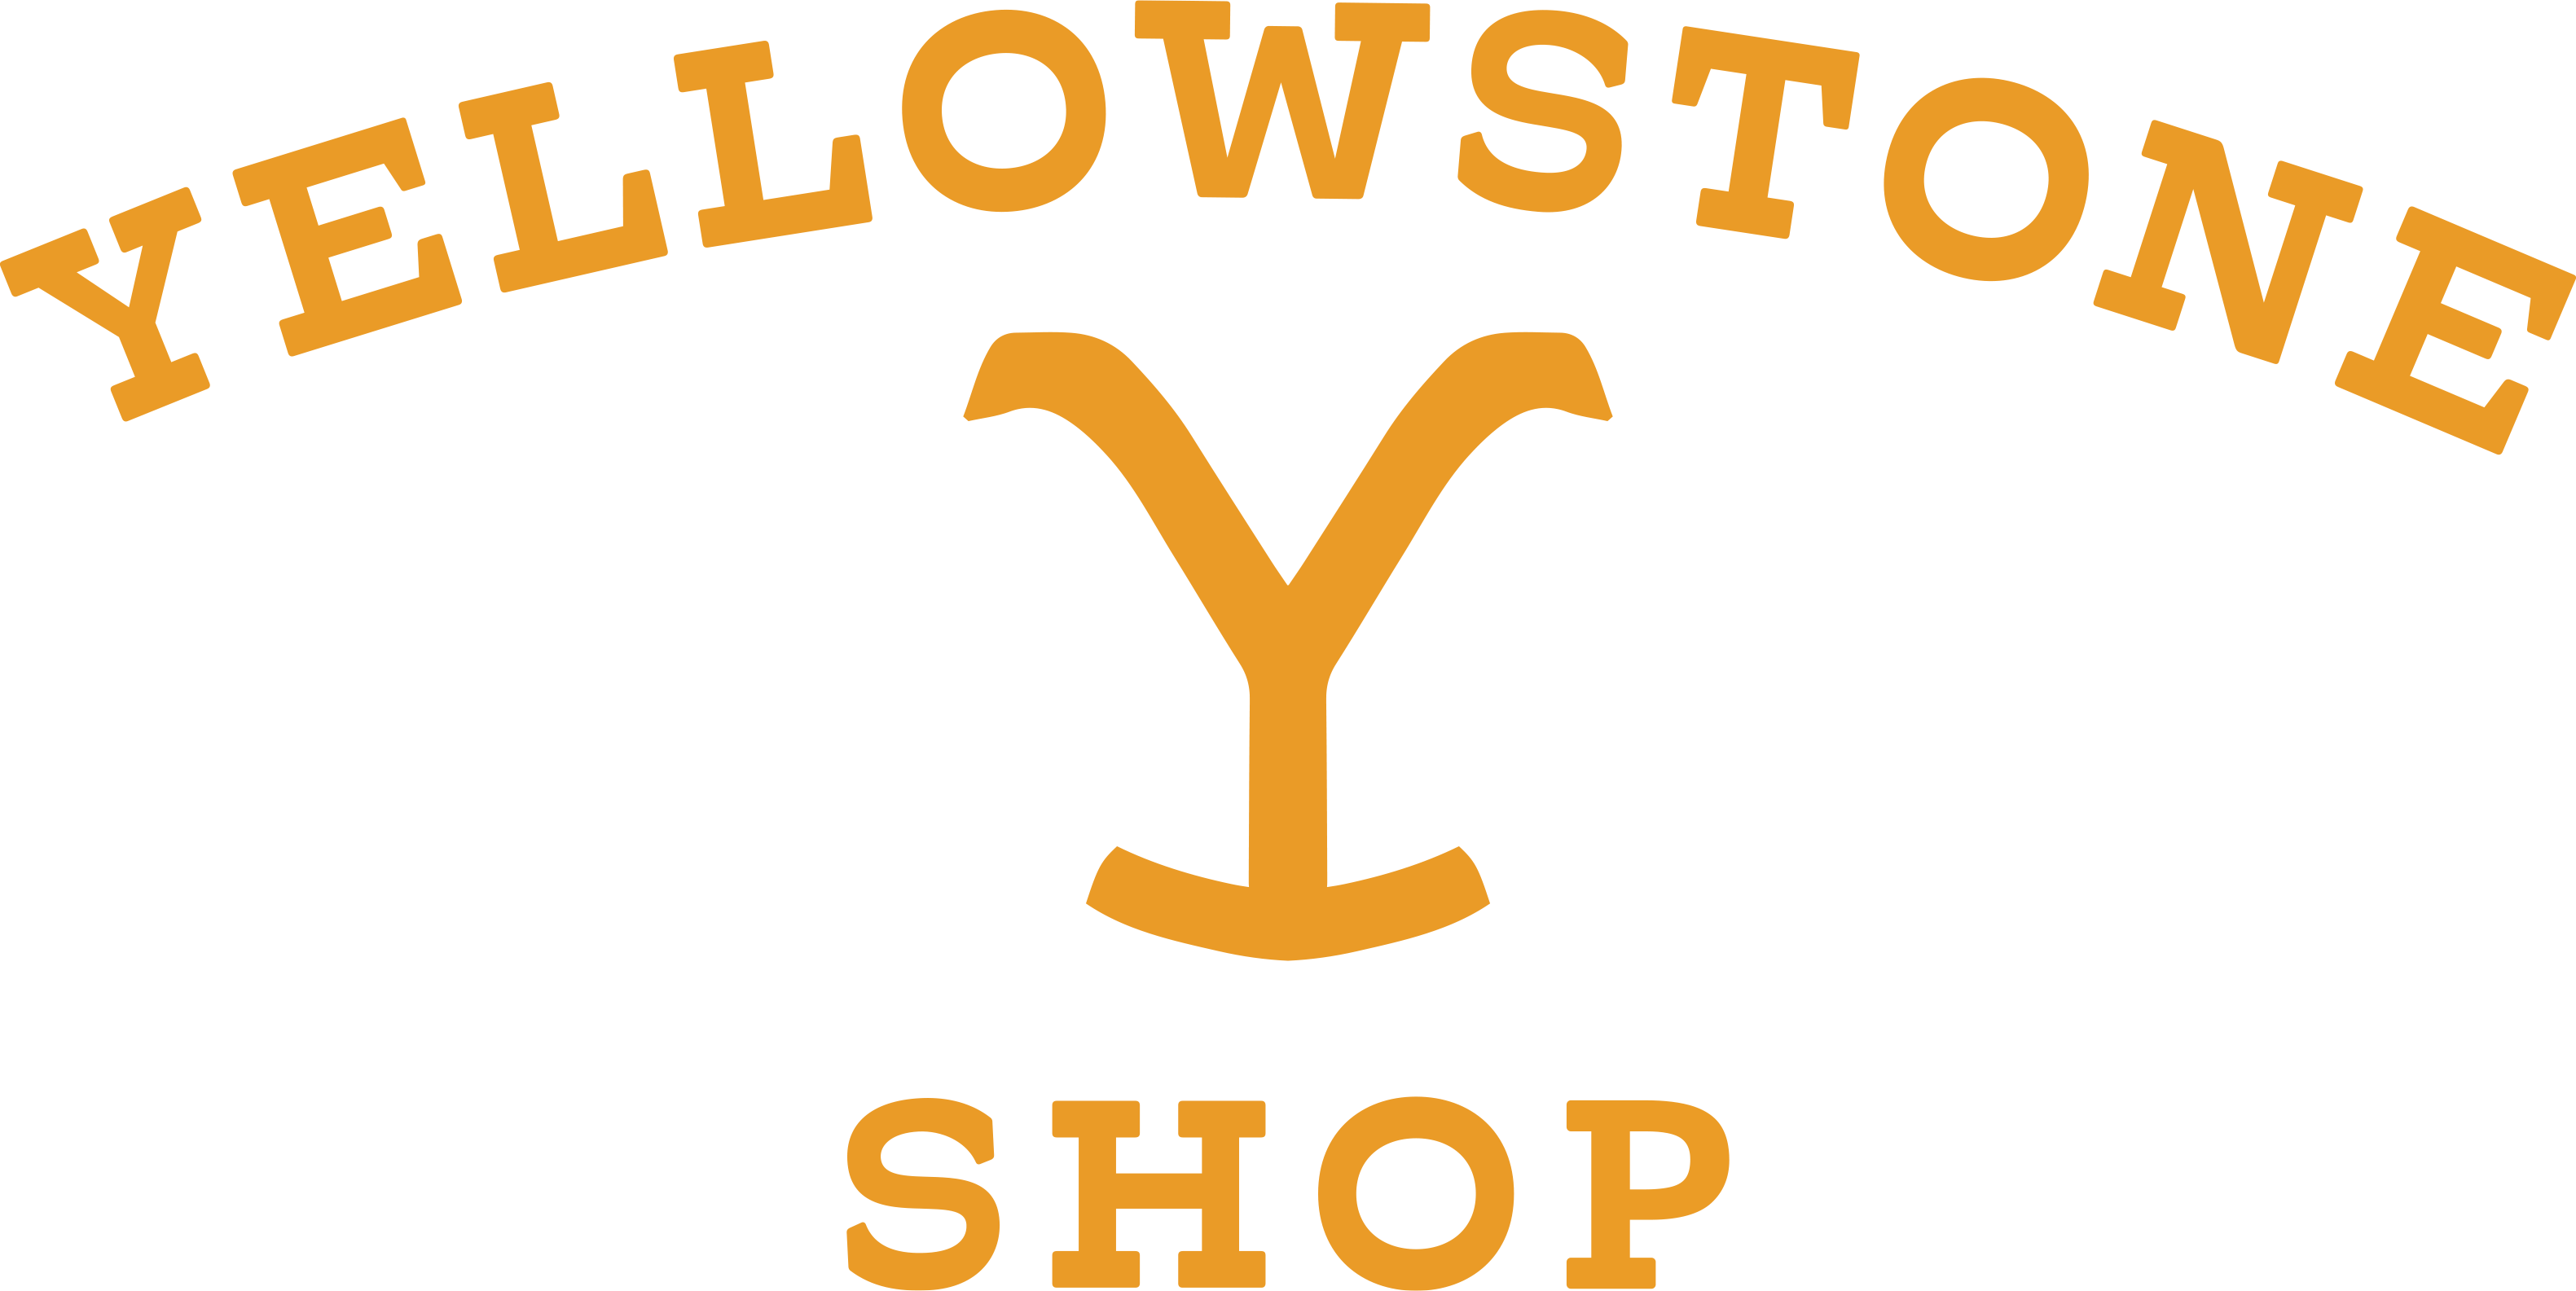 Yellowstone Shop